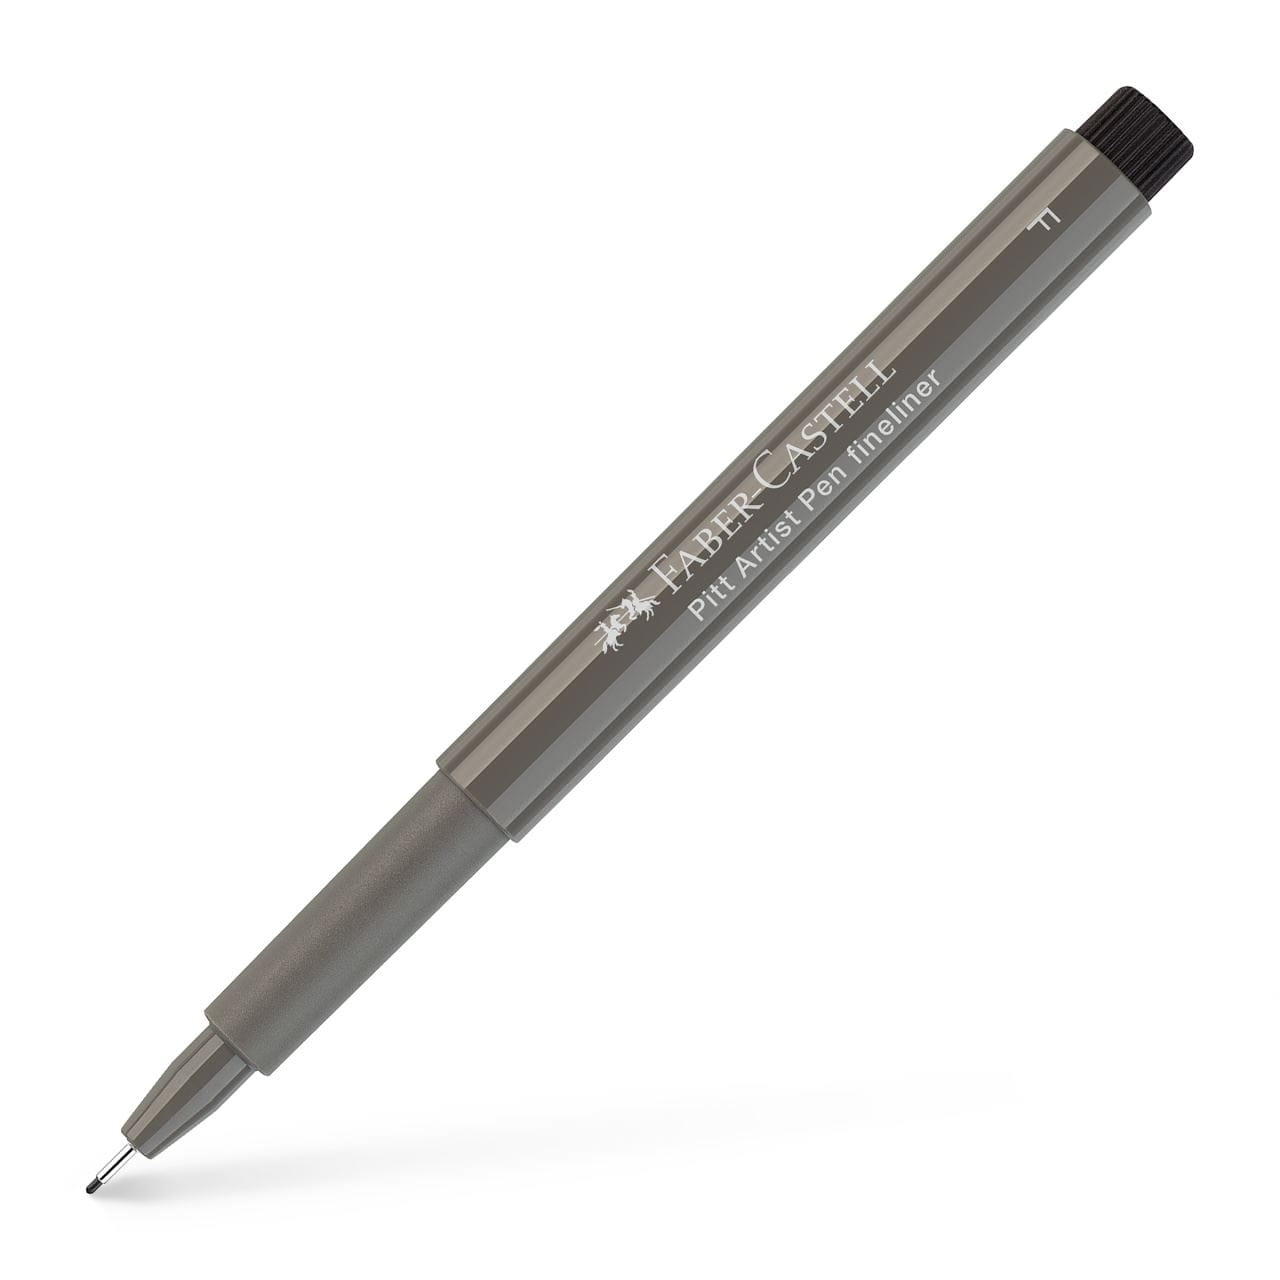 Faber-Castell - Pitt Artist Pen Fineliner F India ink pen, warm grey IV